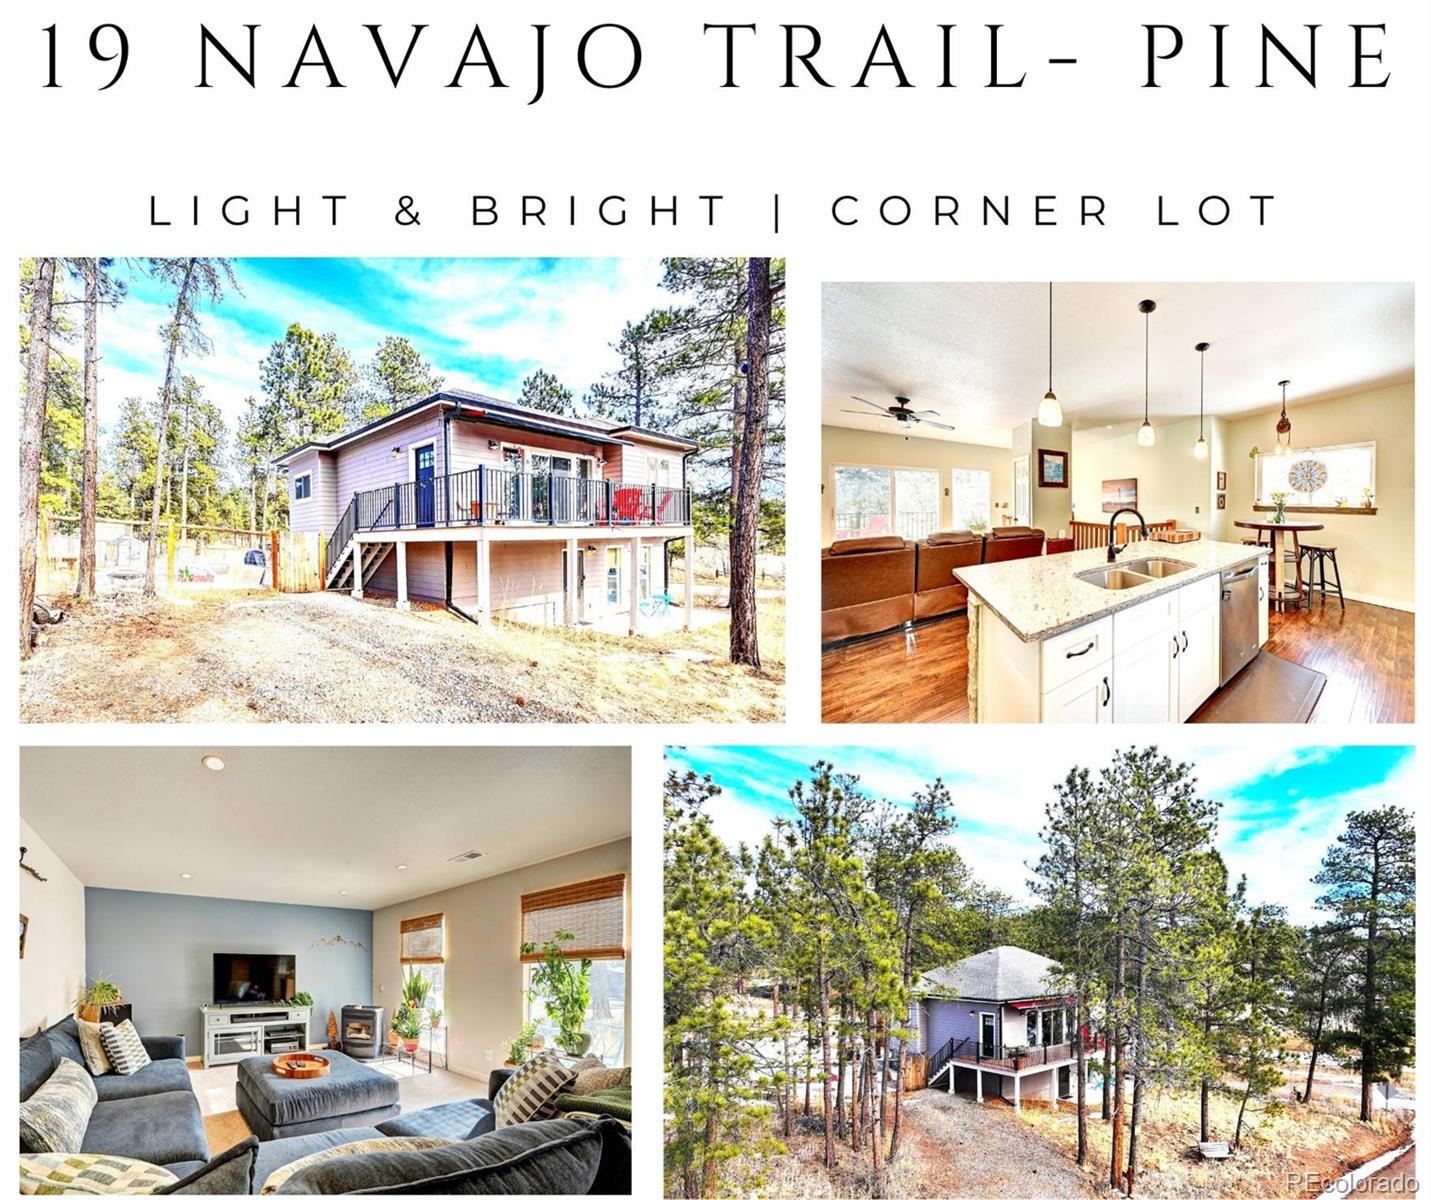 19  Navajo Trail, pine MLS: 7199197 Beds: 3 Baths: 2 Price: $635,000